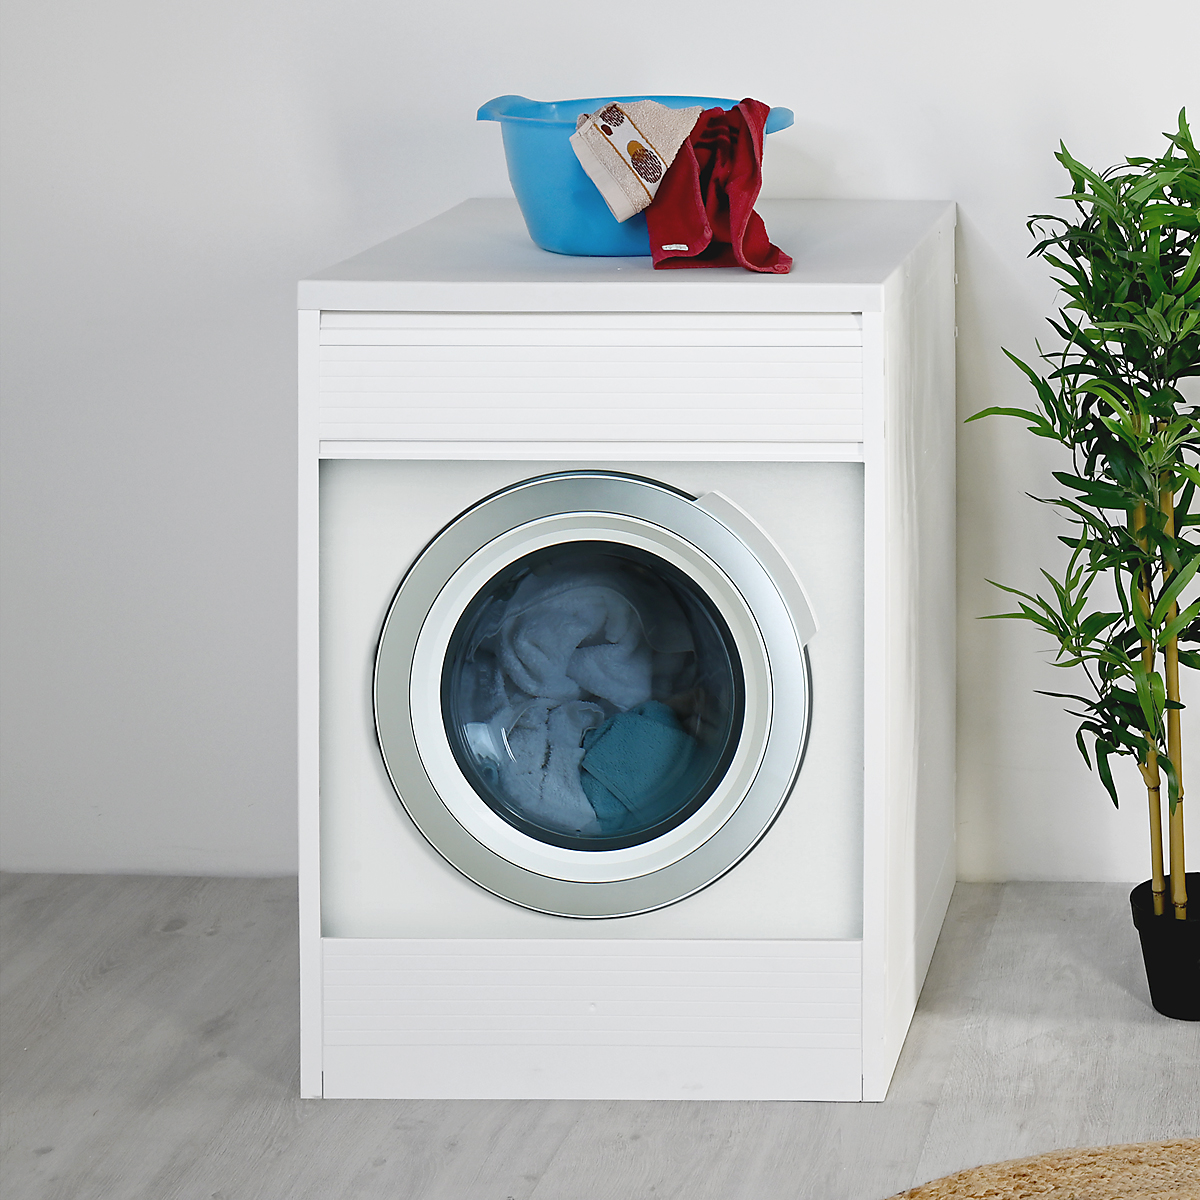 https://www.jo-bagno.it/images/stories/virtuemart/product/mobile-copri-lavatrice-esterno.jpg